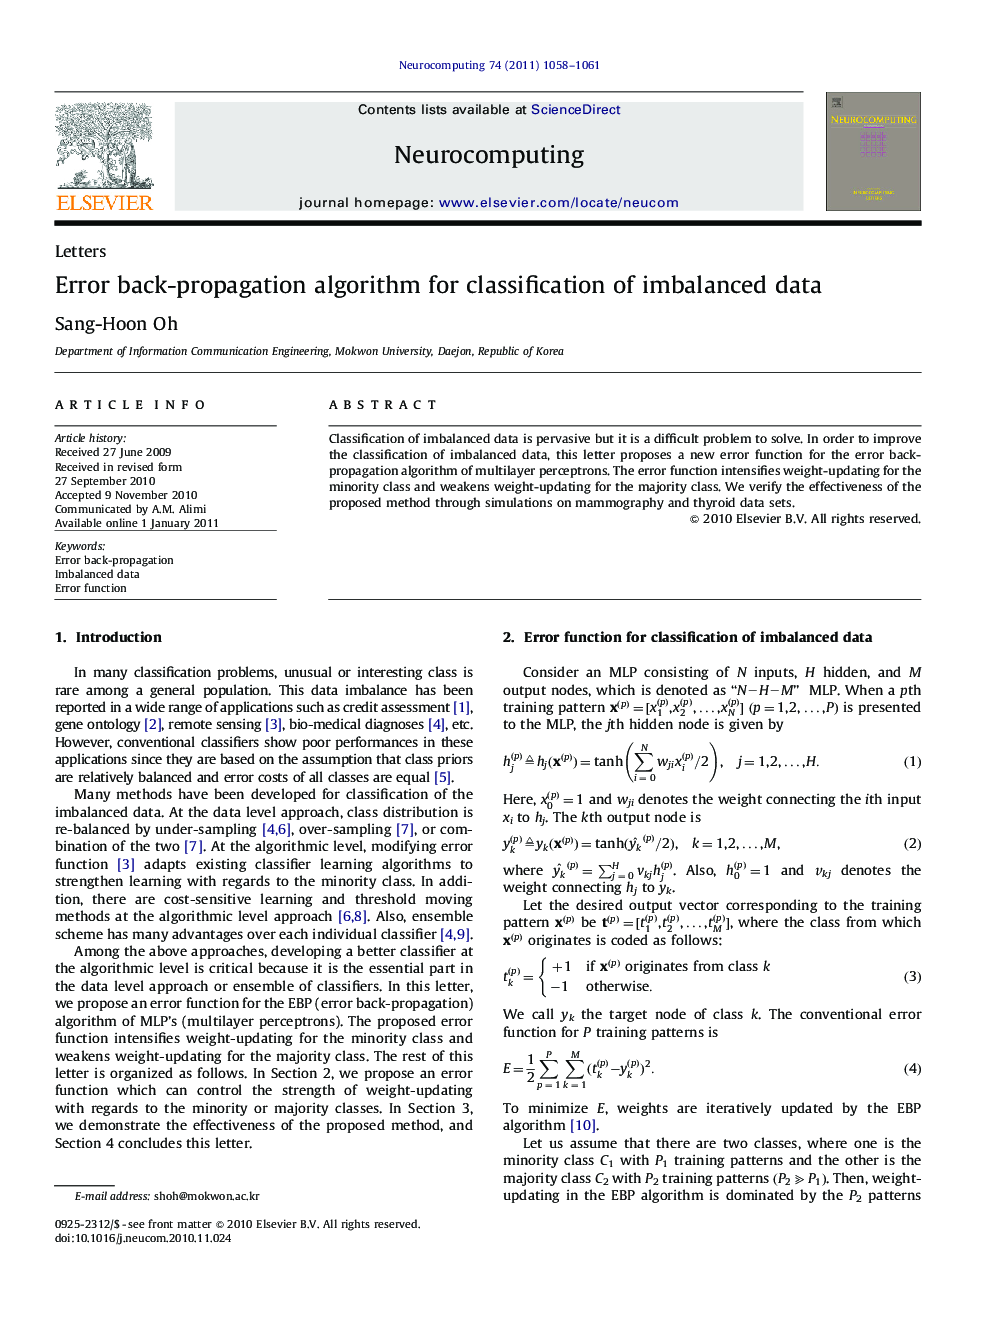 Error back-propagation algorithm for classification of imbalanced data